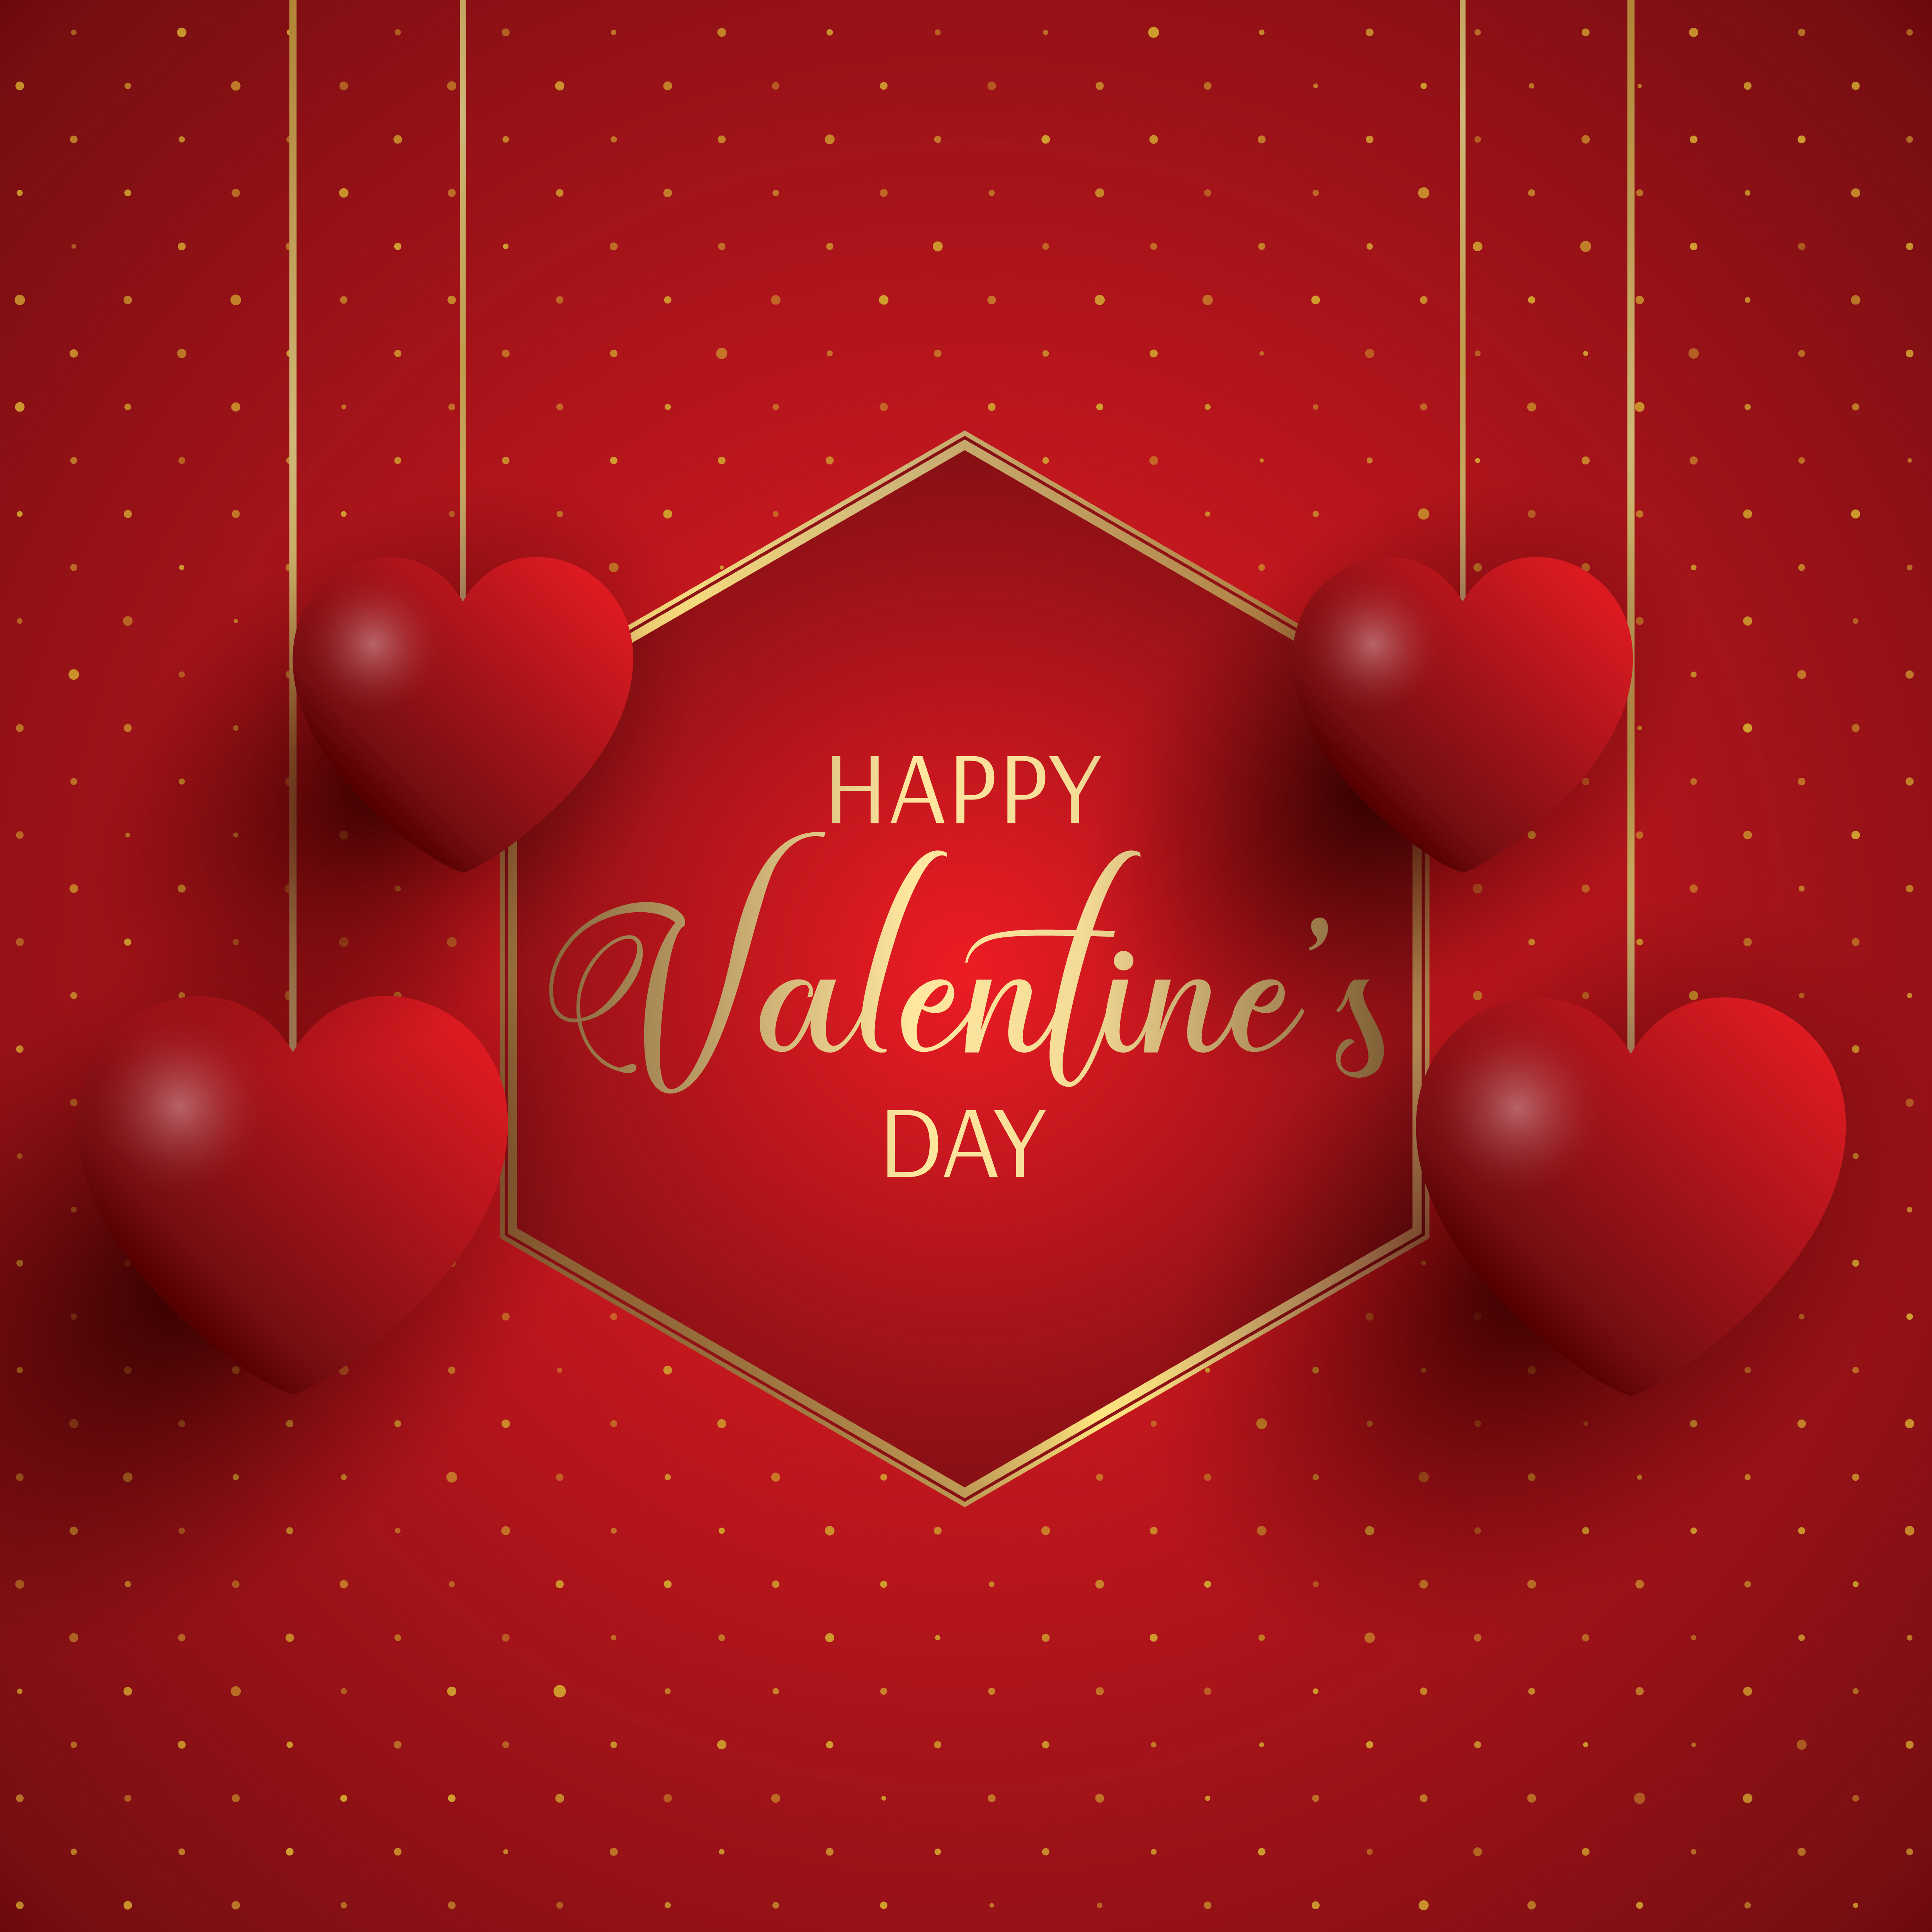 Elegant Valentine's Day background 692055 - Download Free Vectors ...